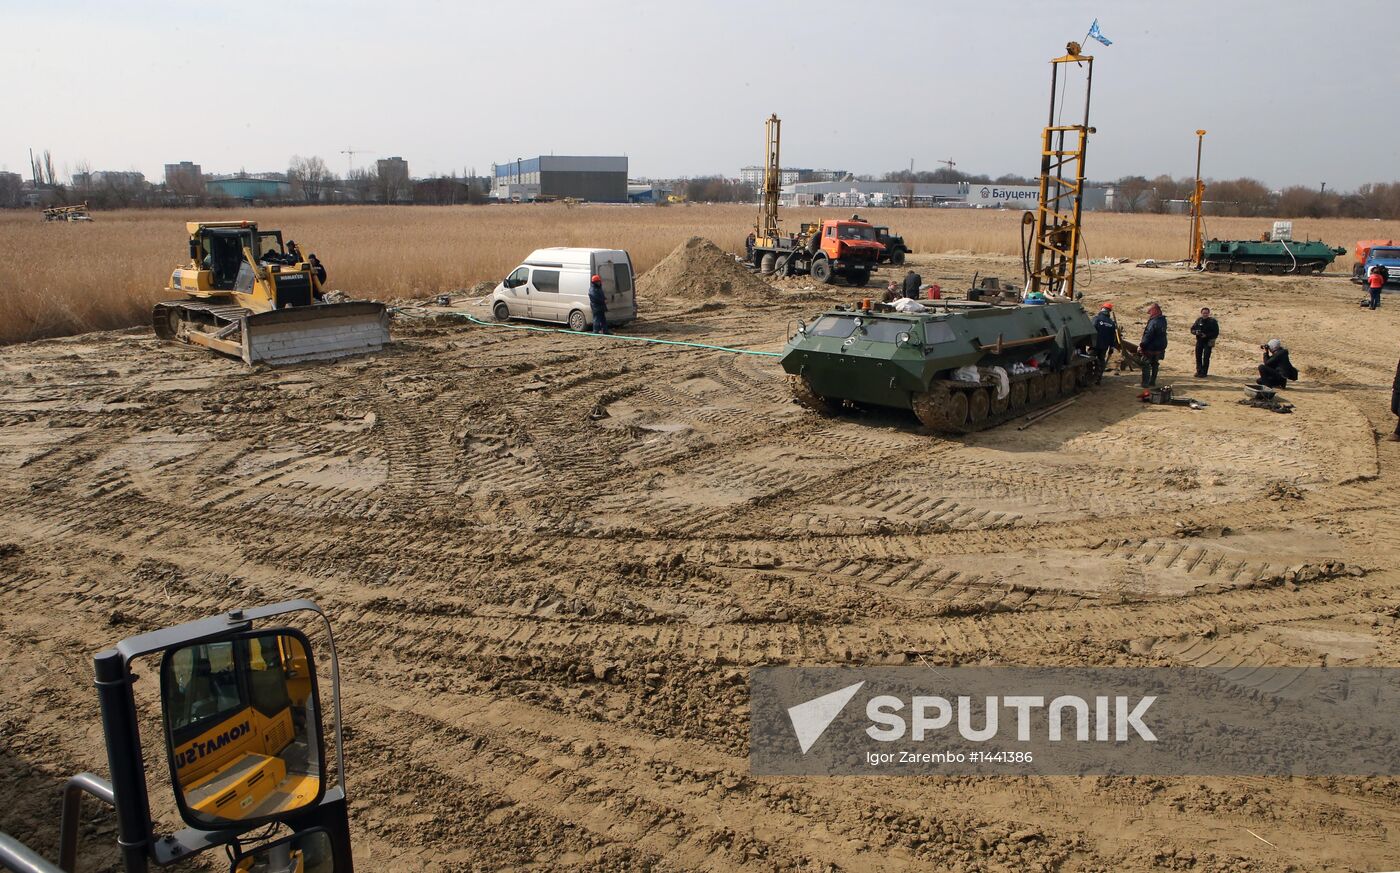 Vitaly Mutko checks on 2018 World Cup stadium construction